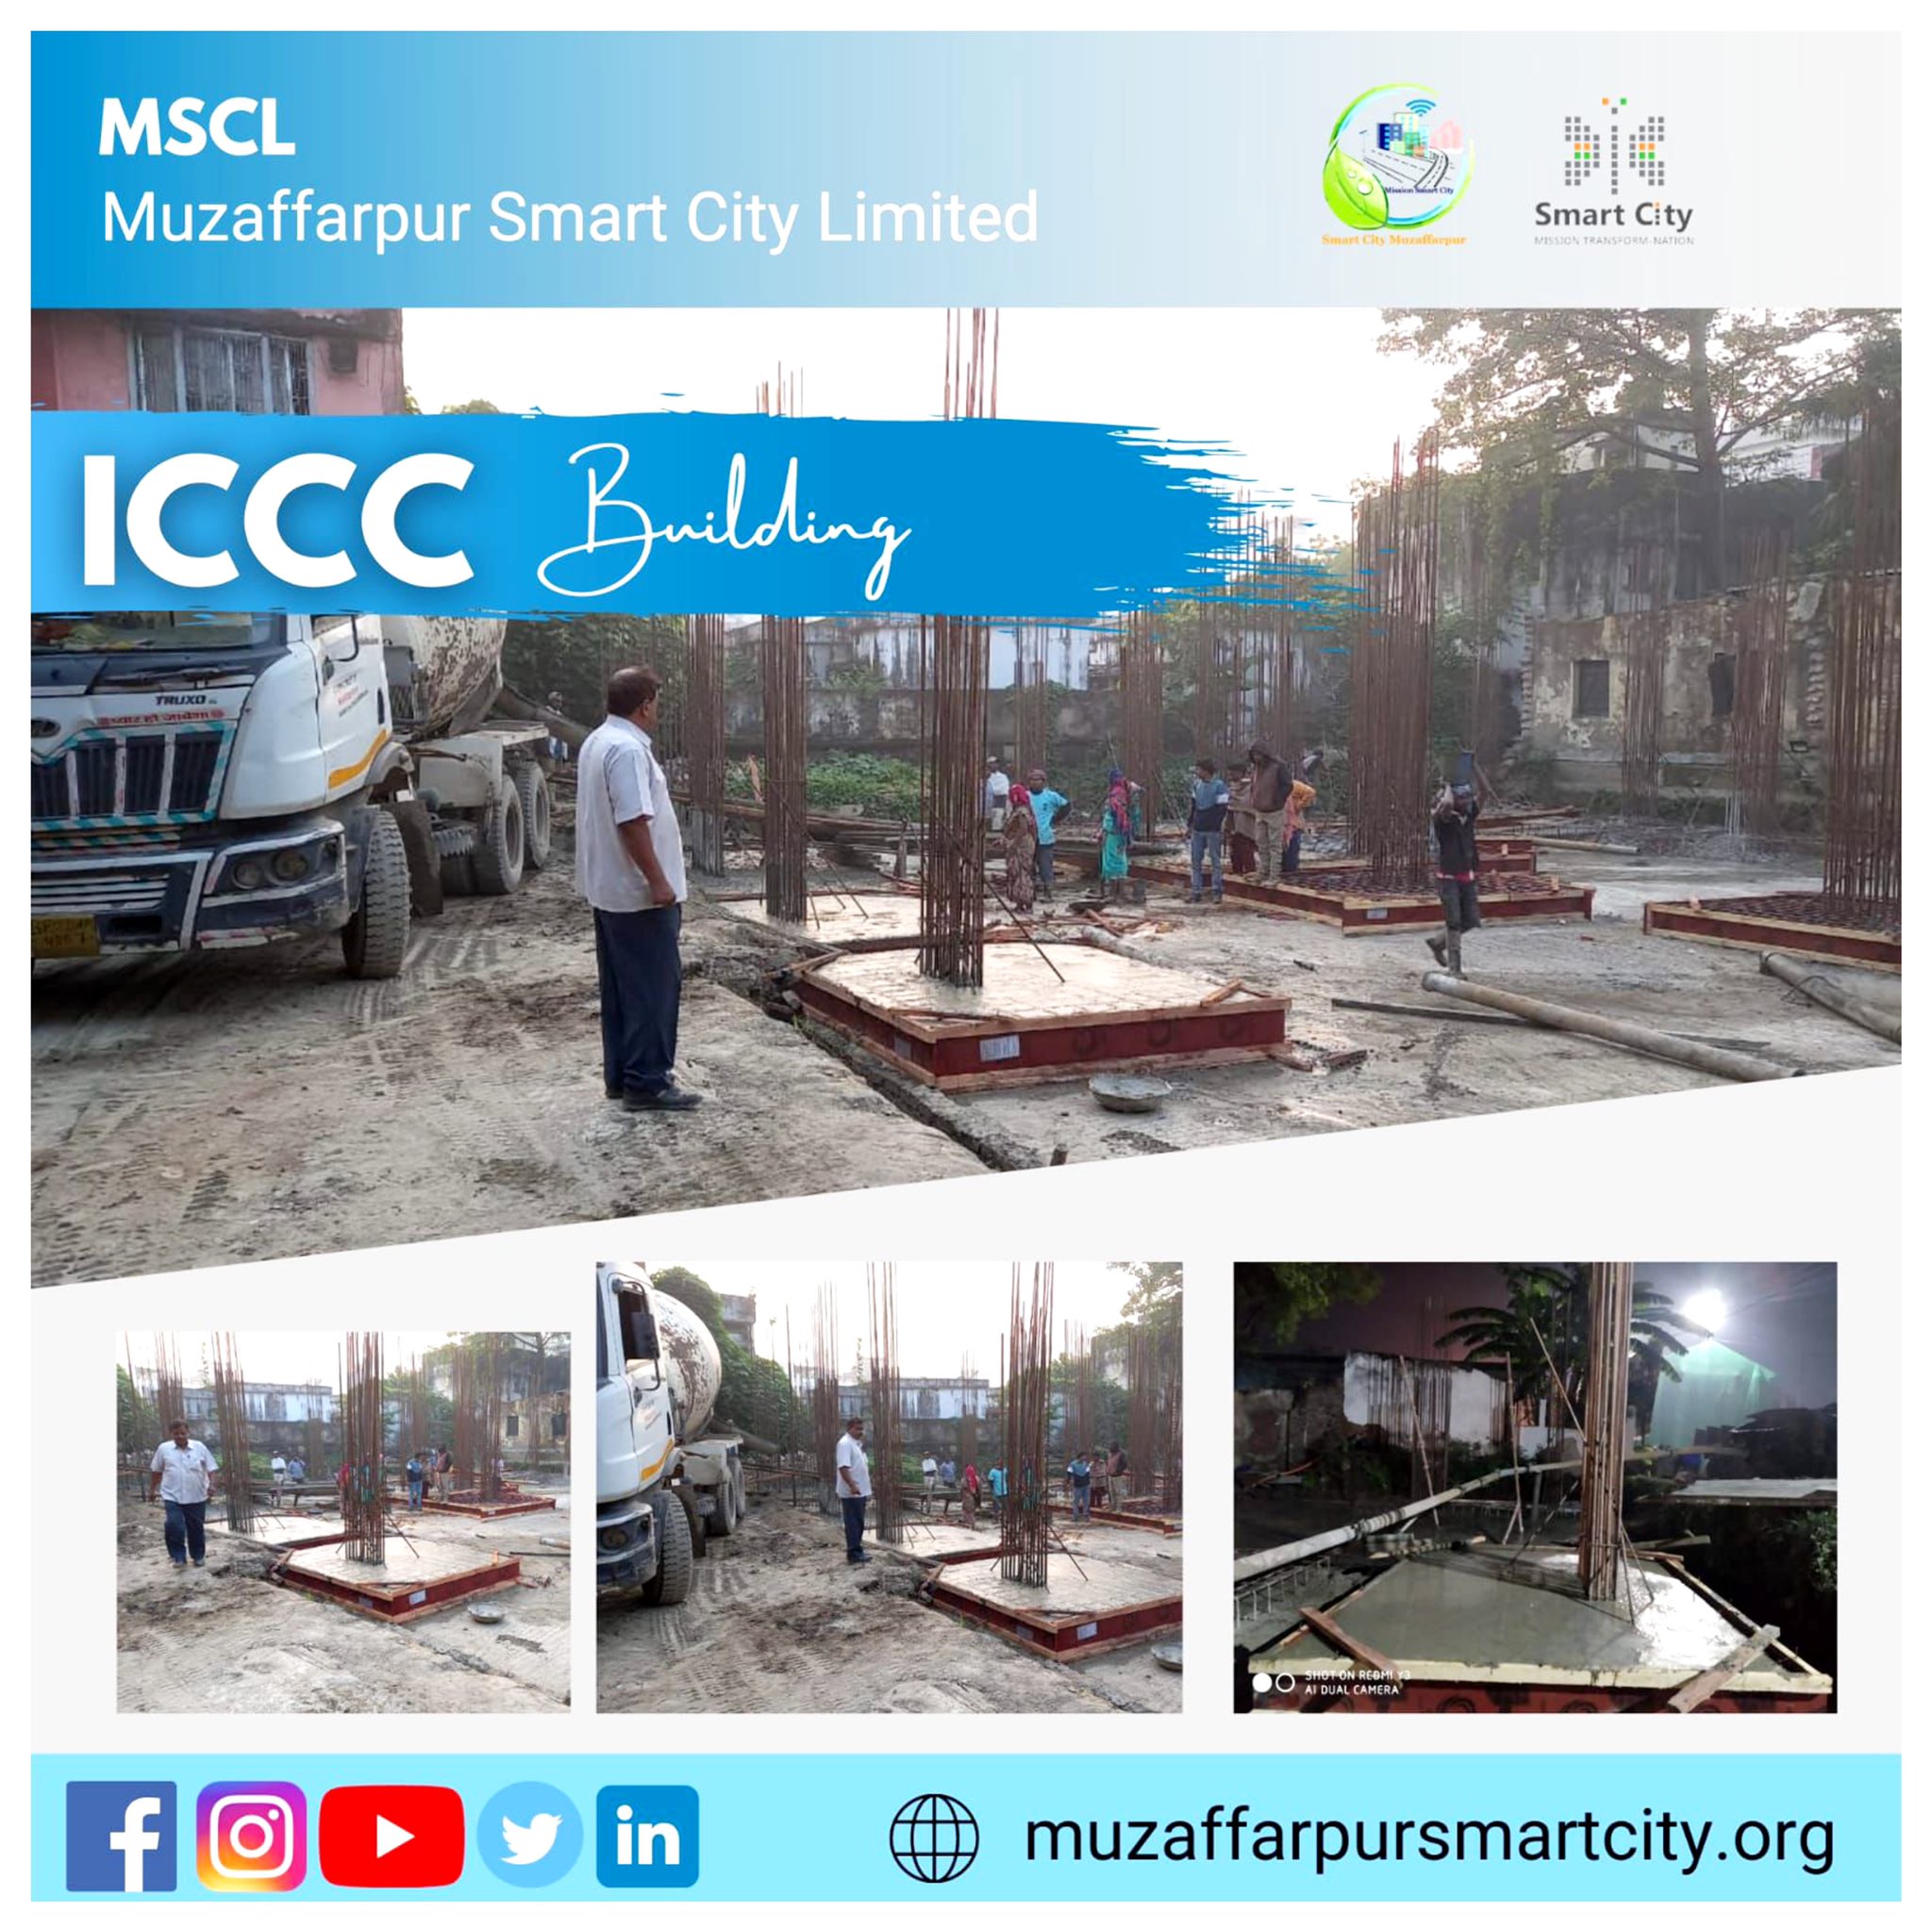 ICCC Building muzaffarpur smart city